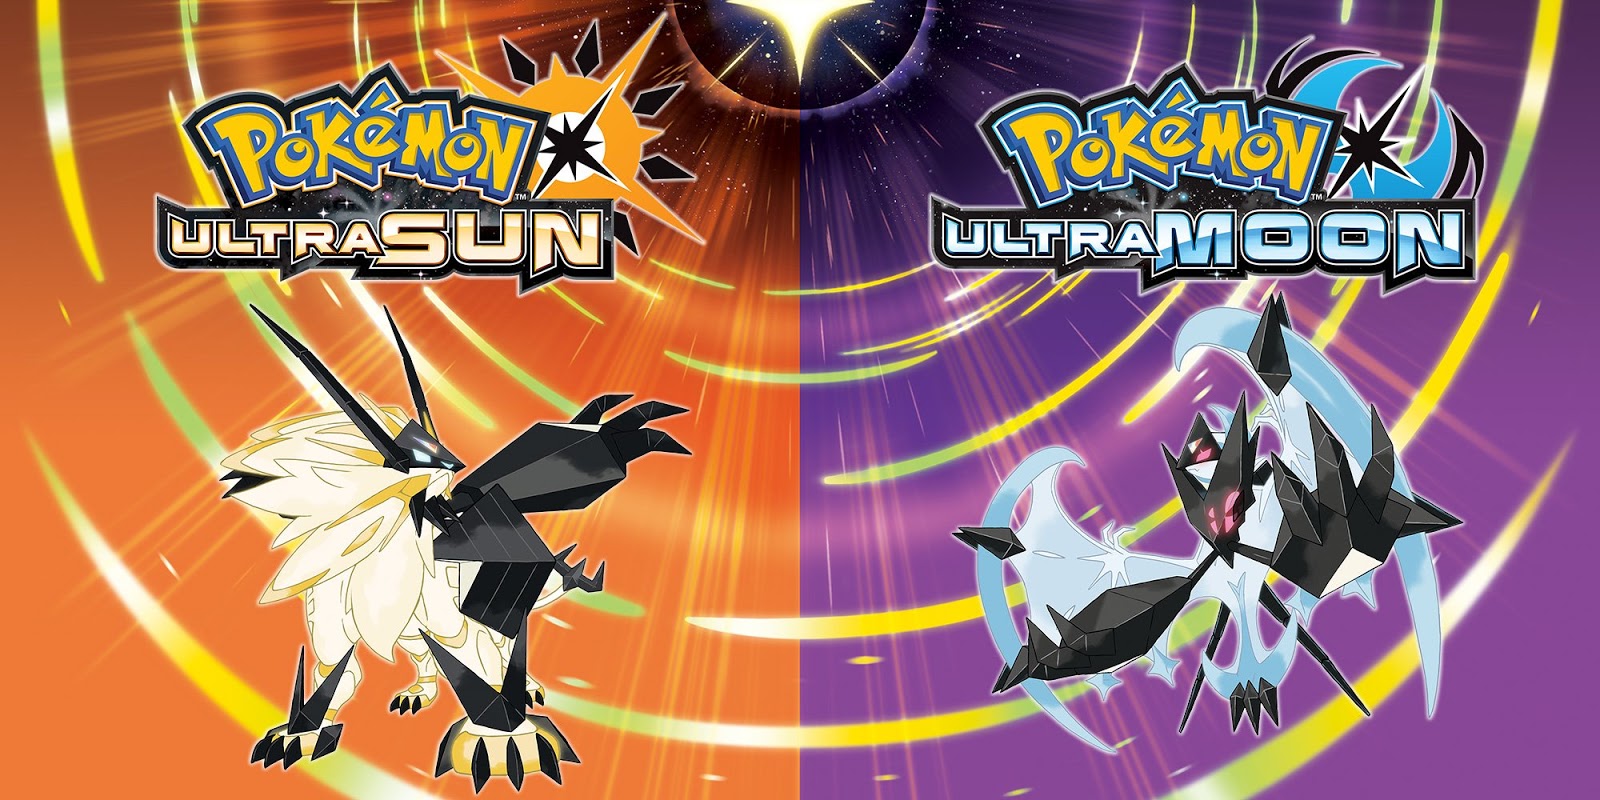 Pokémon Ultra Sun and Pokémon Ultra Moon: The Official Alola